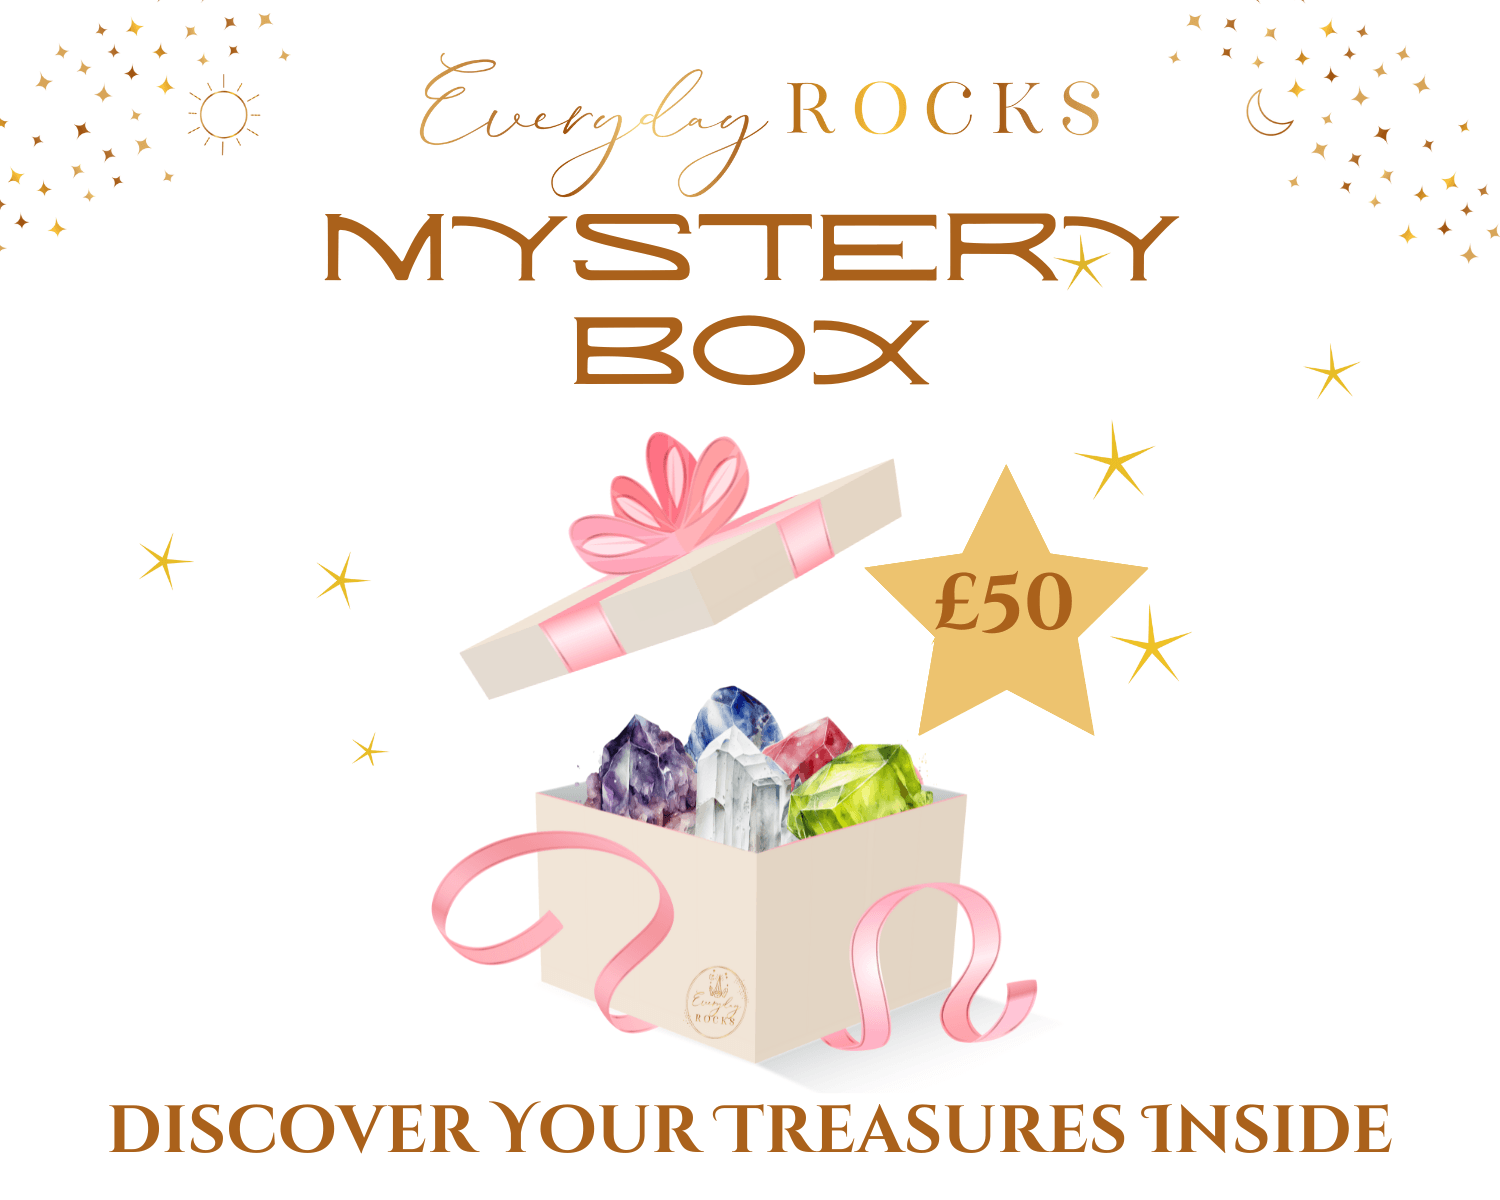 £50 Mystery Box - Everyday Rocks